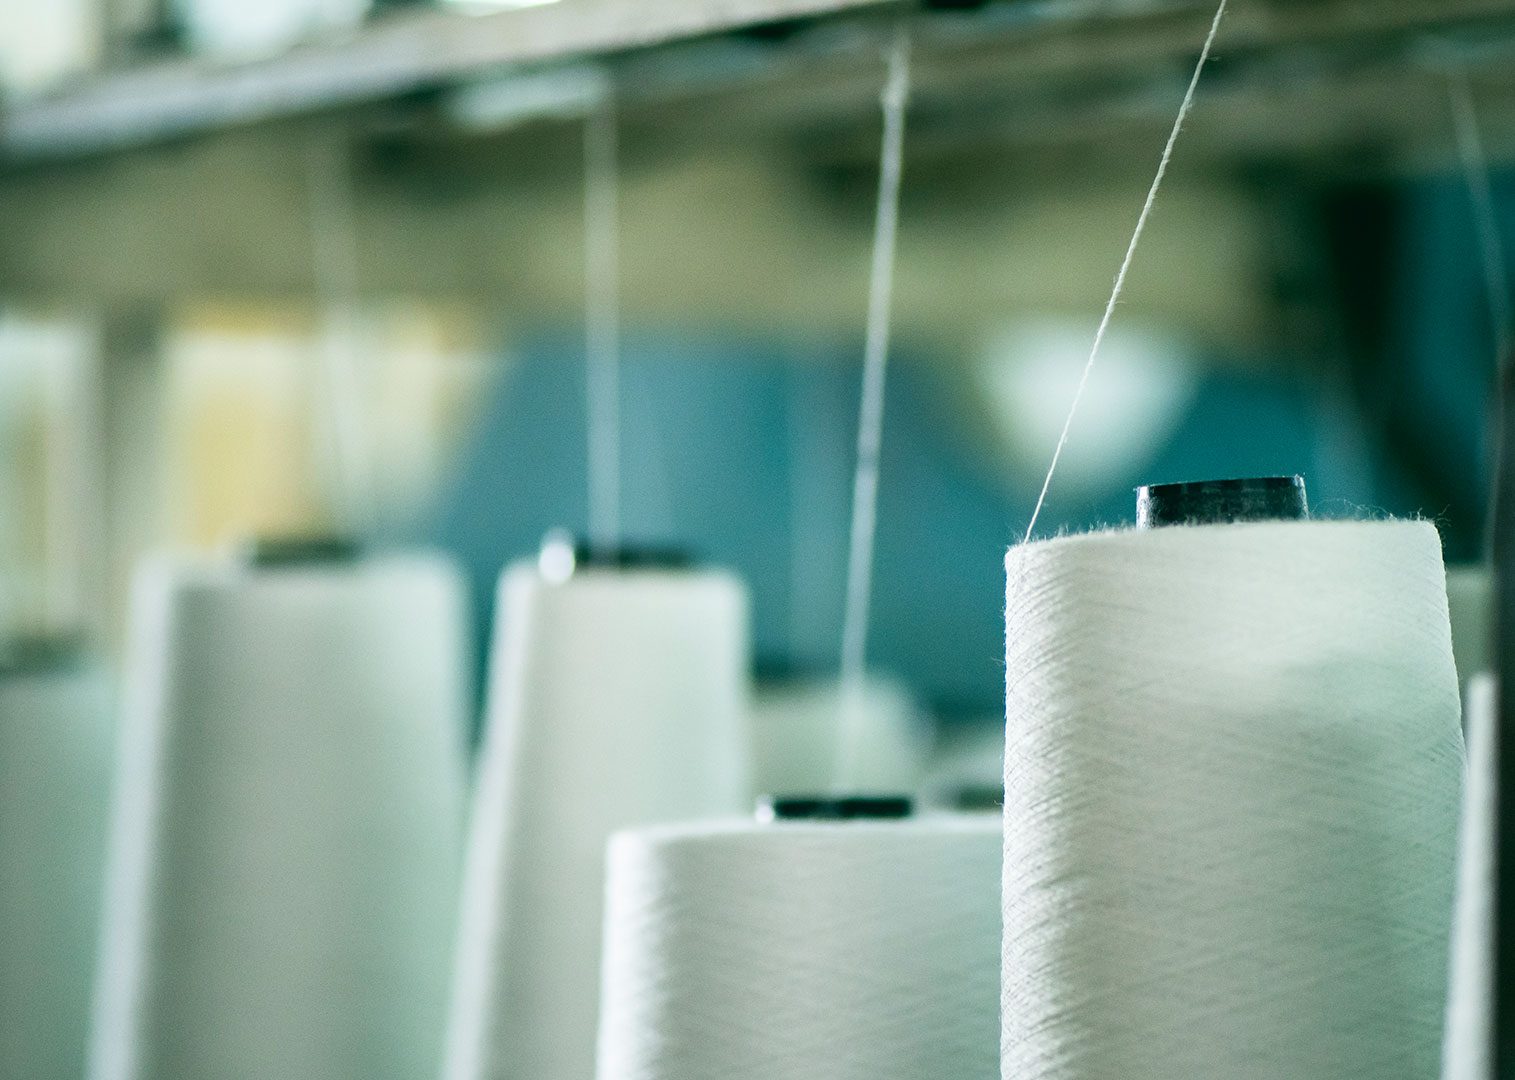 Tulsi Fabrics India Pvt. Ltd. - Leading Exporter & Producer of Embroidery Fabrics, Weaving, Home Furnishing and Digital Marketing